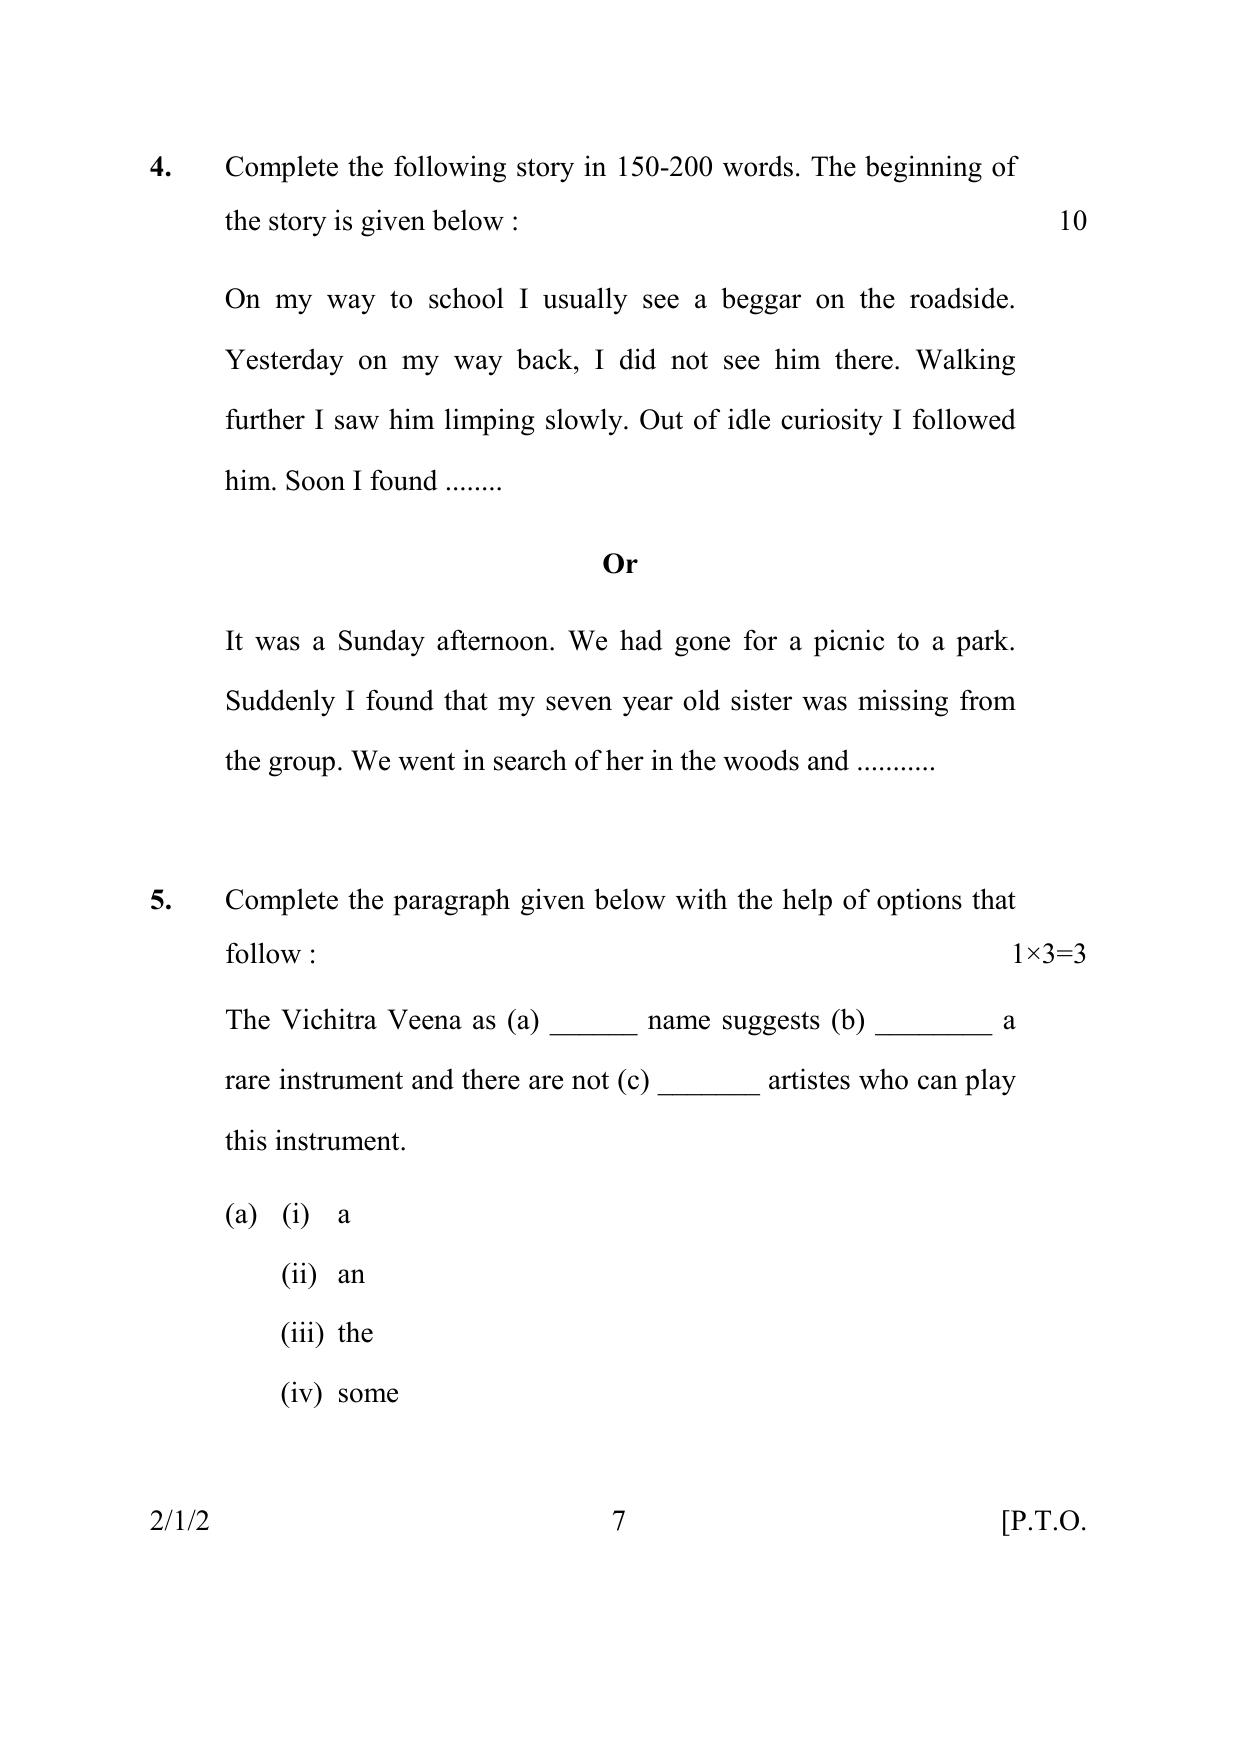 CBSE Class 10 2-1-2 ENGLISH LANGUAGE & LIT. 2016 Question Paper - Page 7